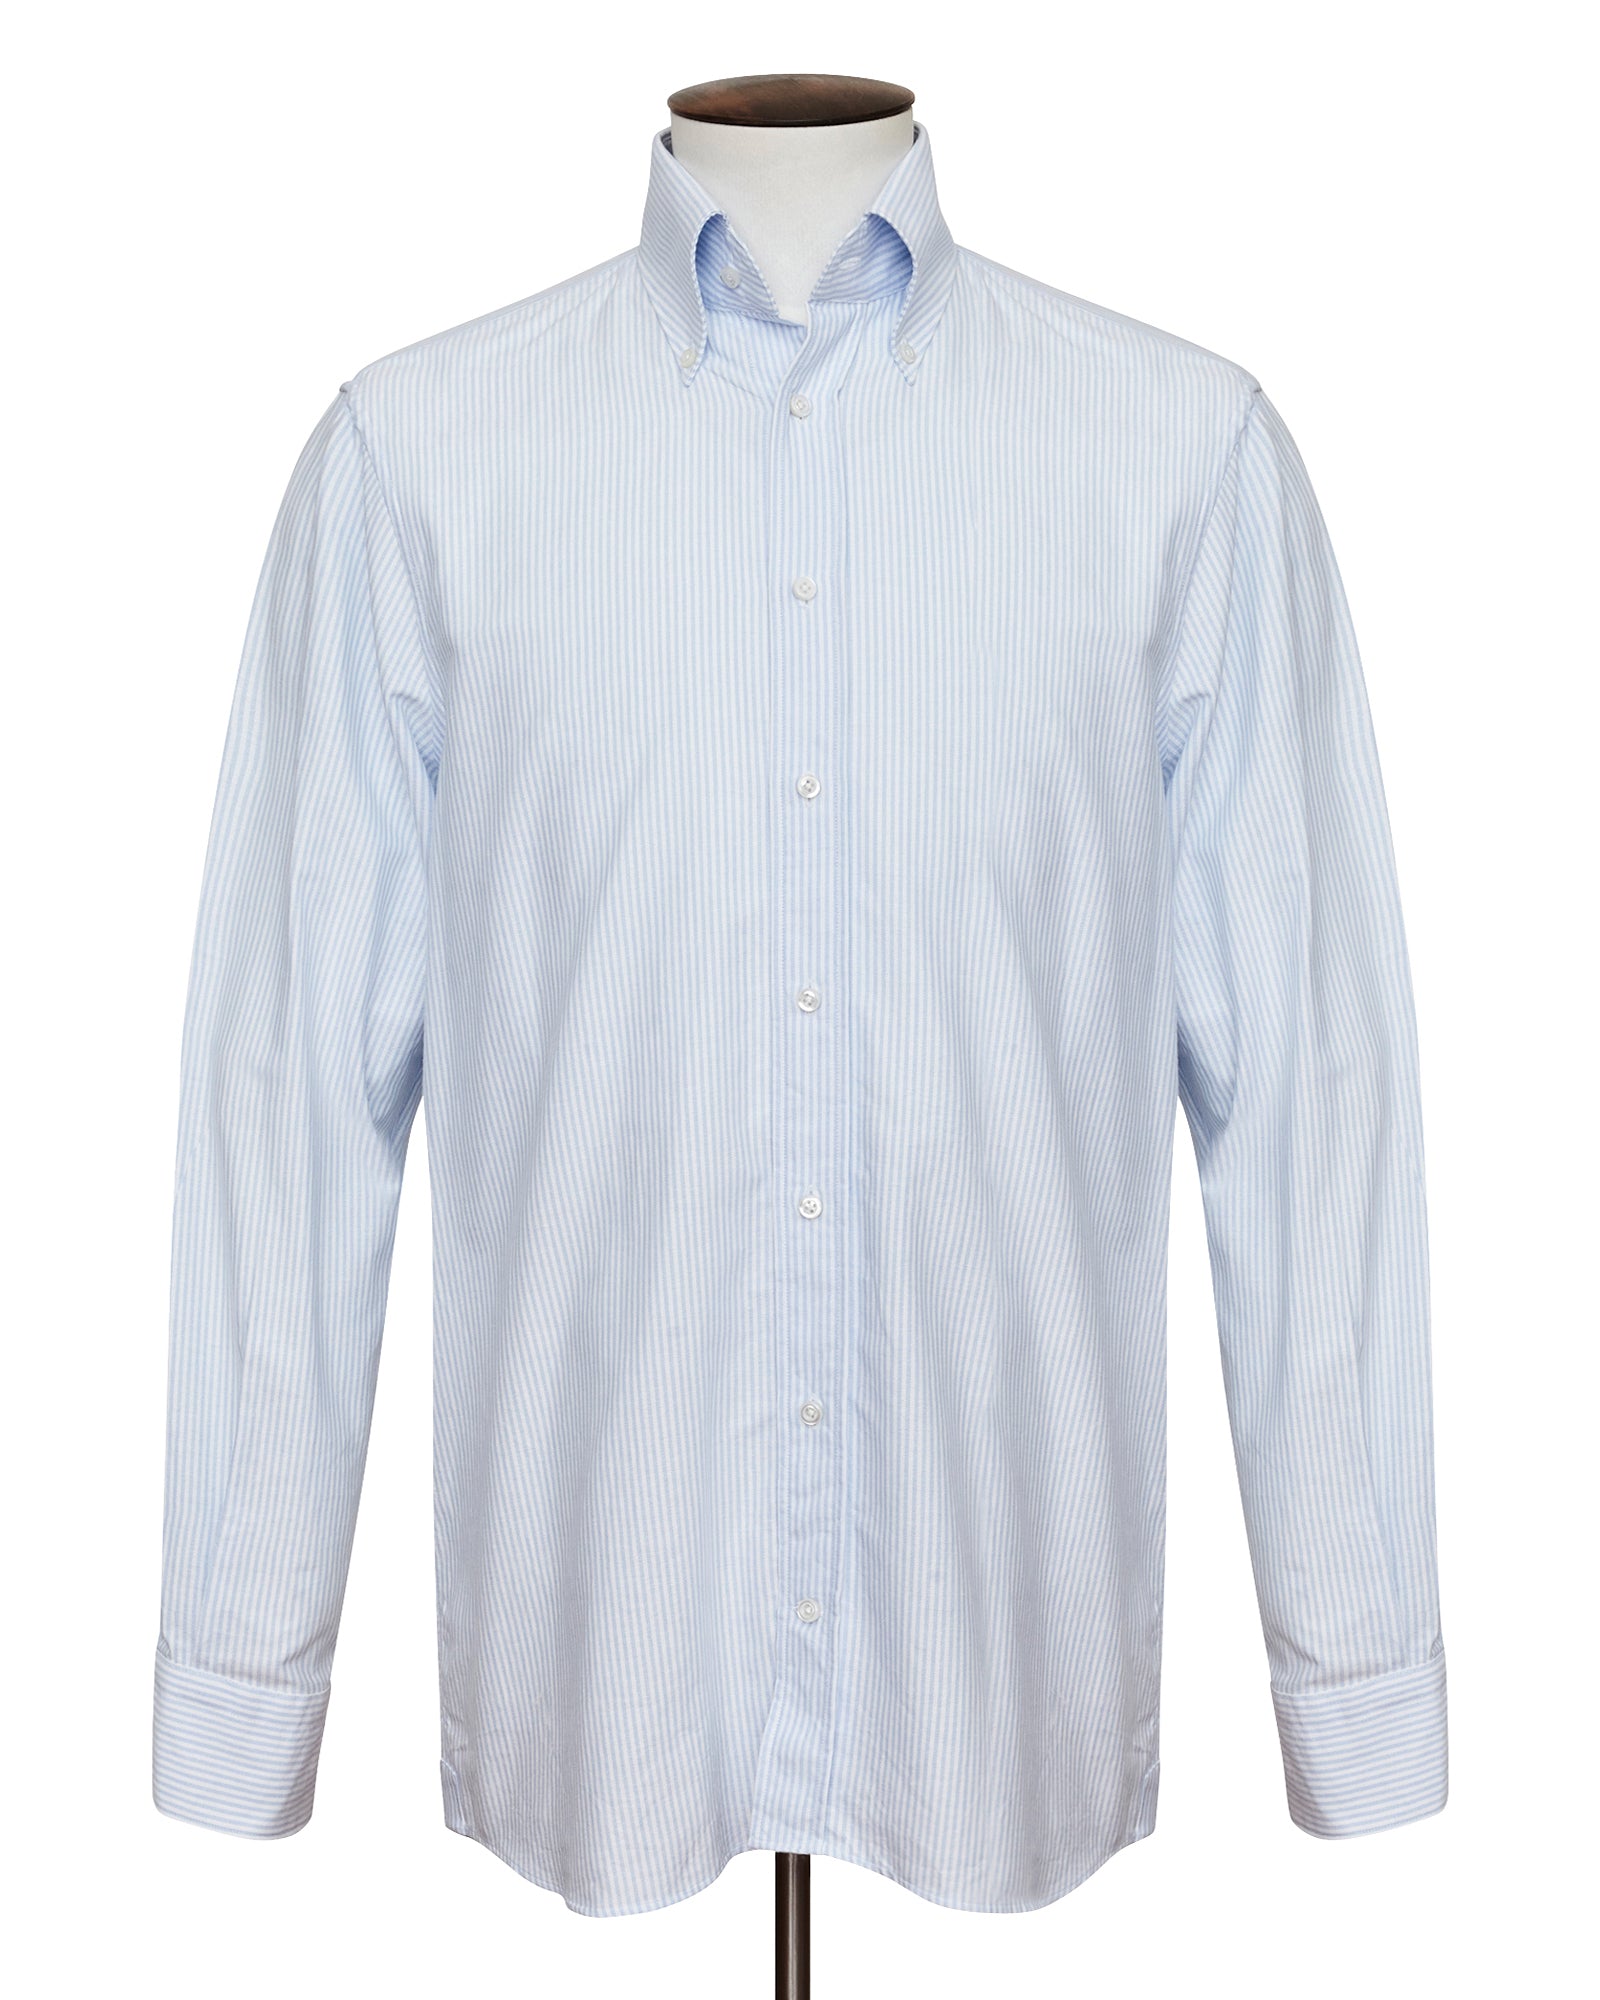 Classic Blue & White Stripe Oxford Button-Down Shirt